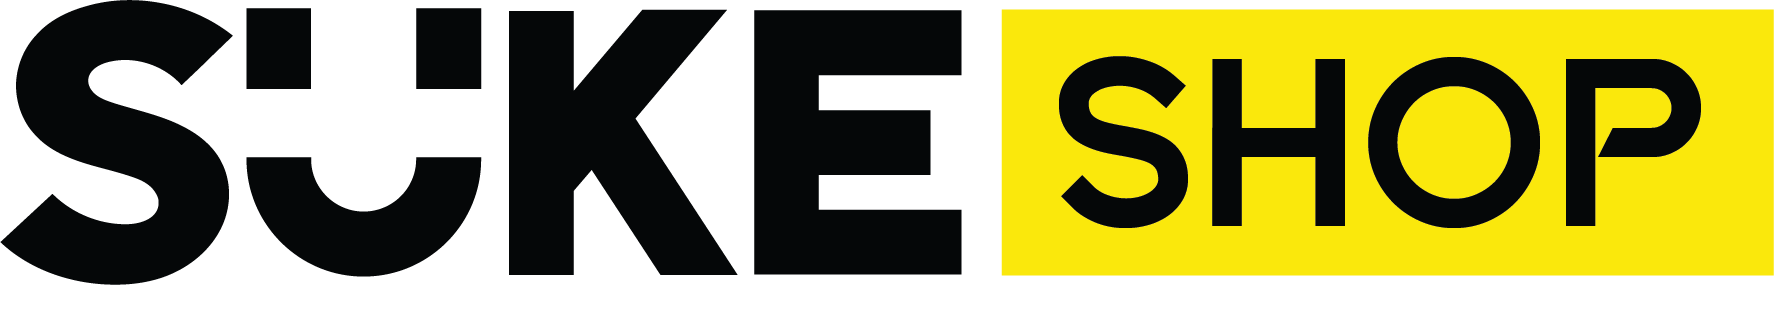 logo Suke Shop (1)